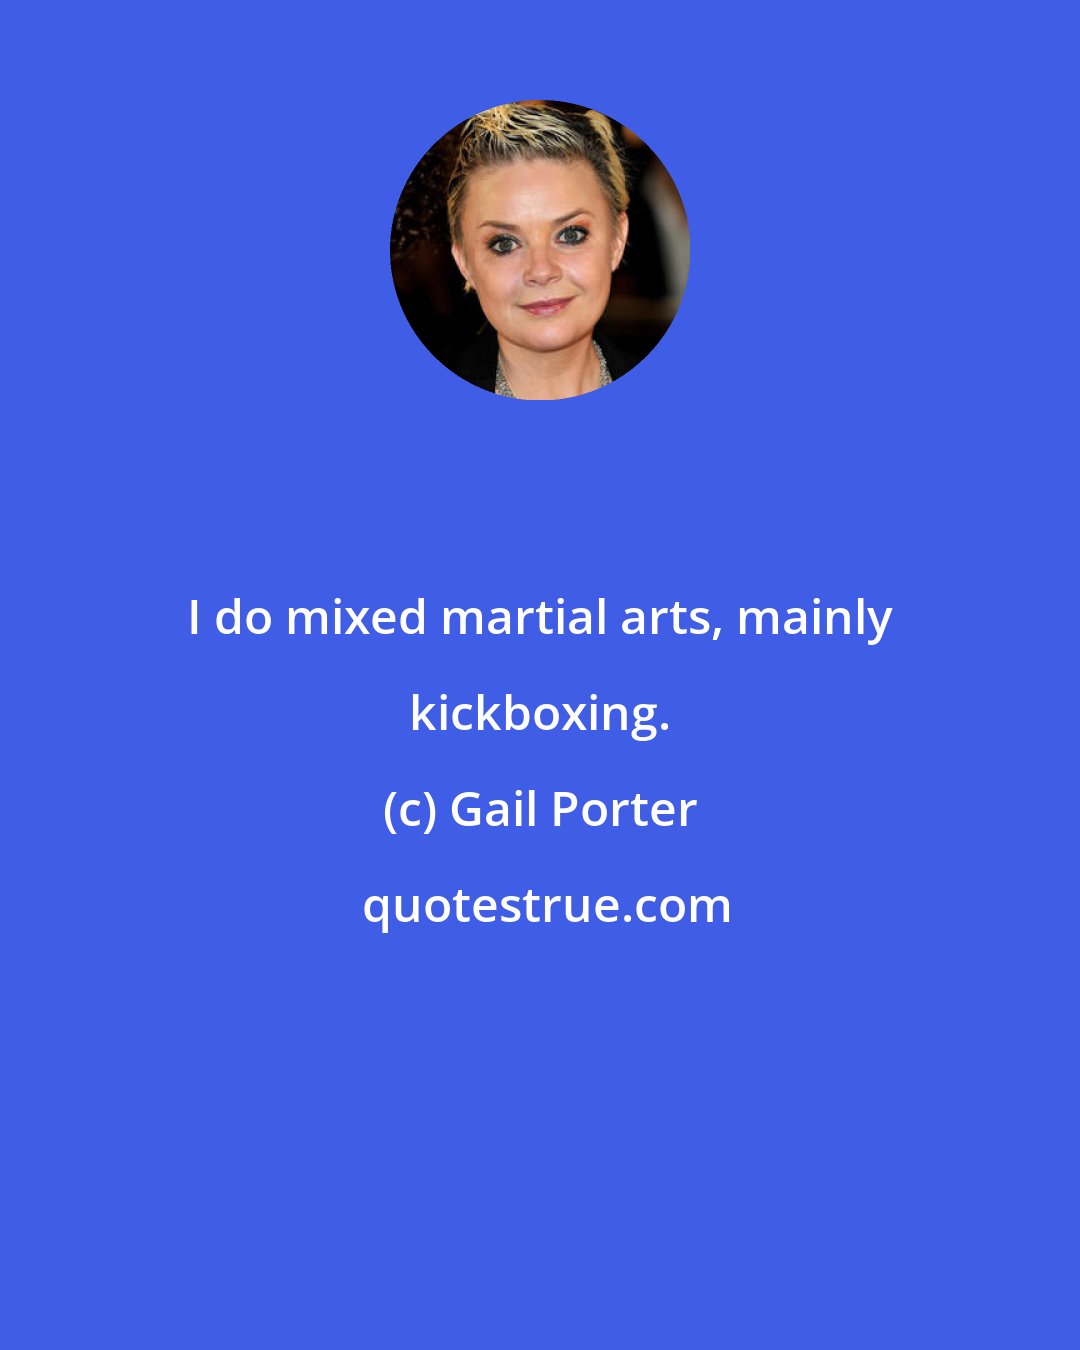 Gail Porter: I do mixed martial arts, mainly kickboxing.